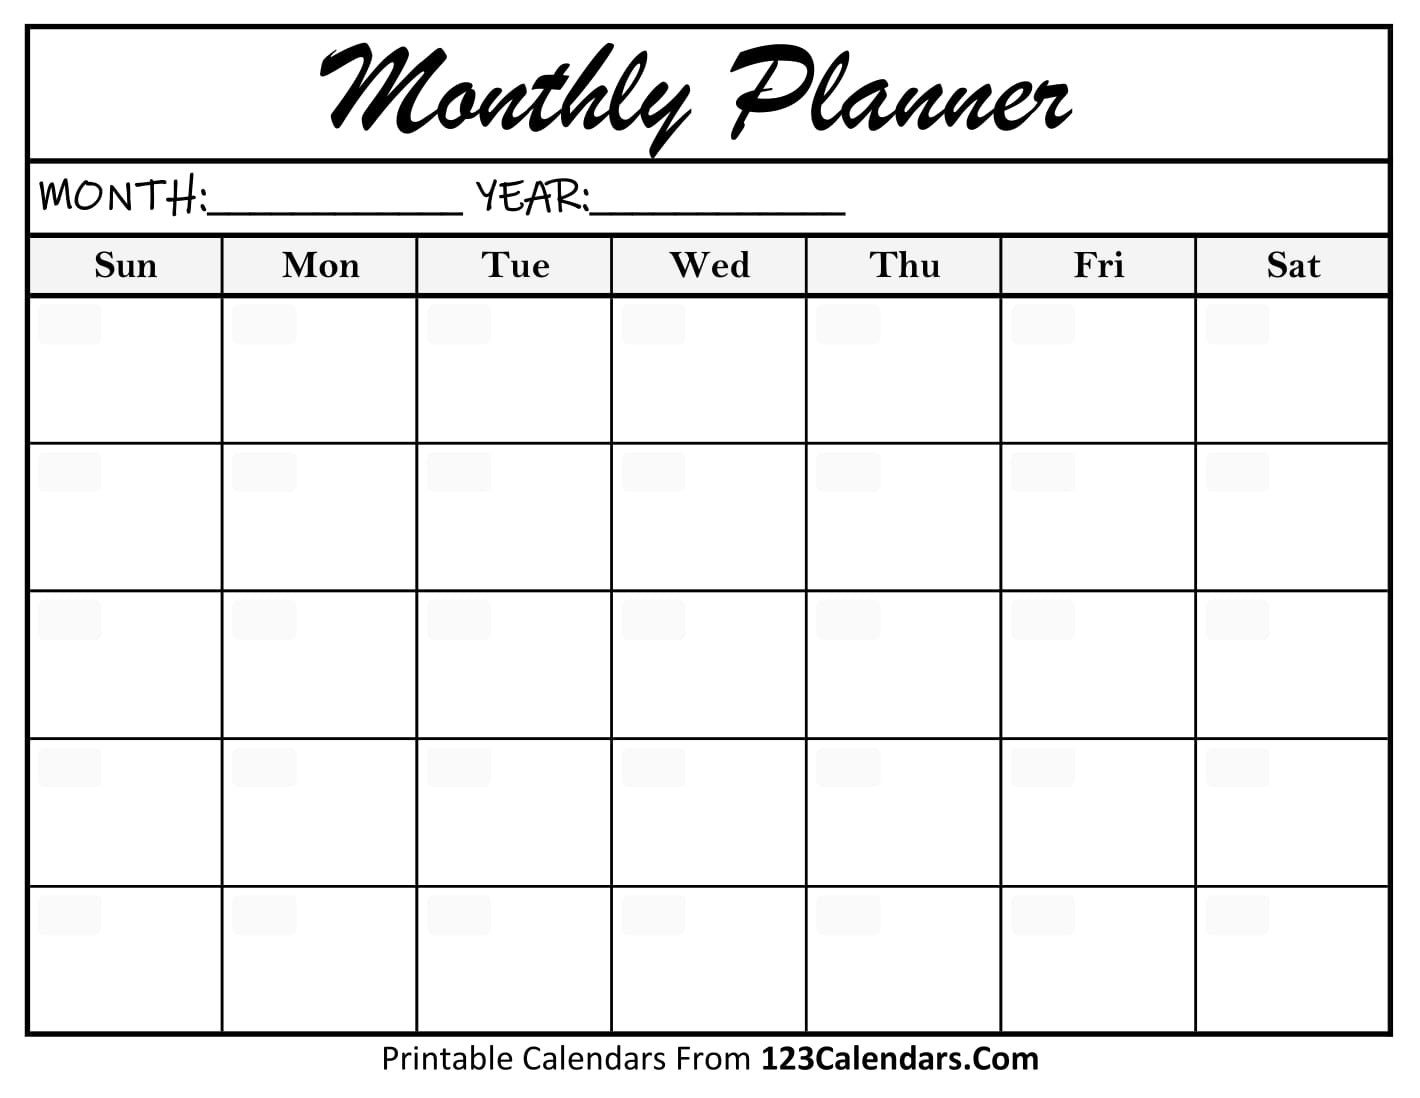 Printable Monthly Planner Templates 123Calendars com